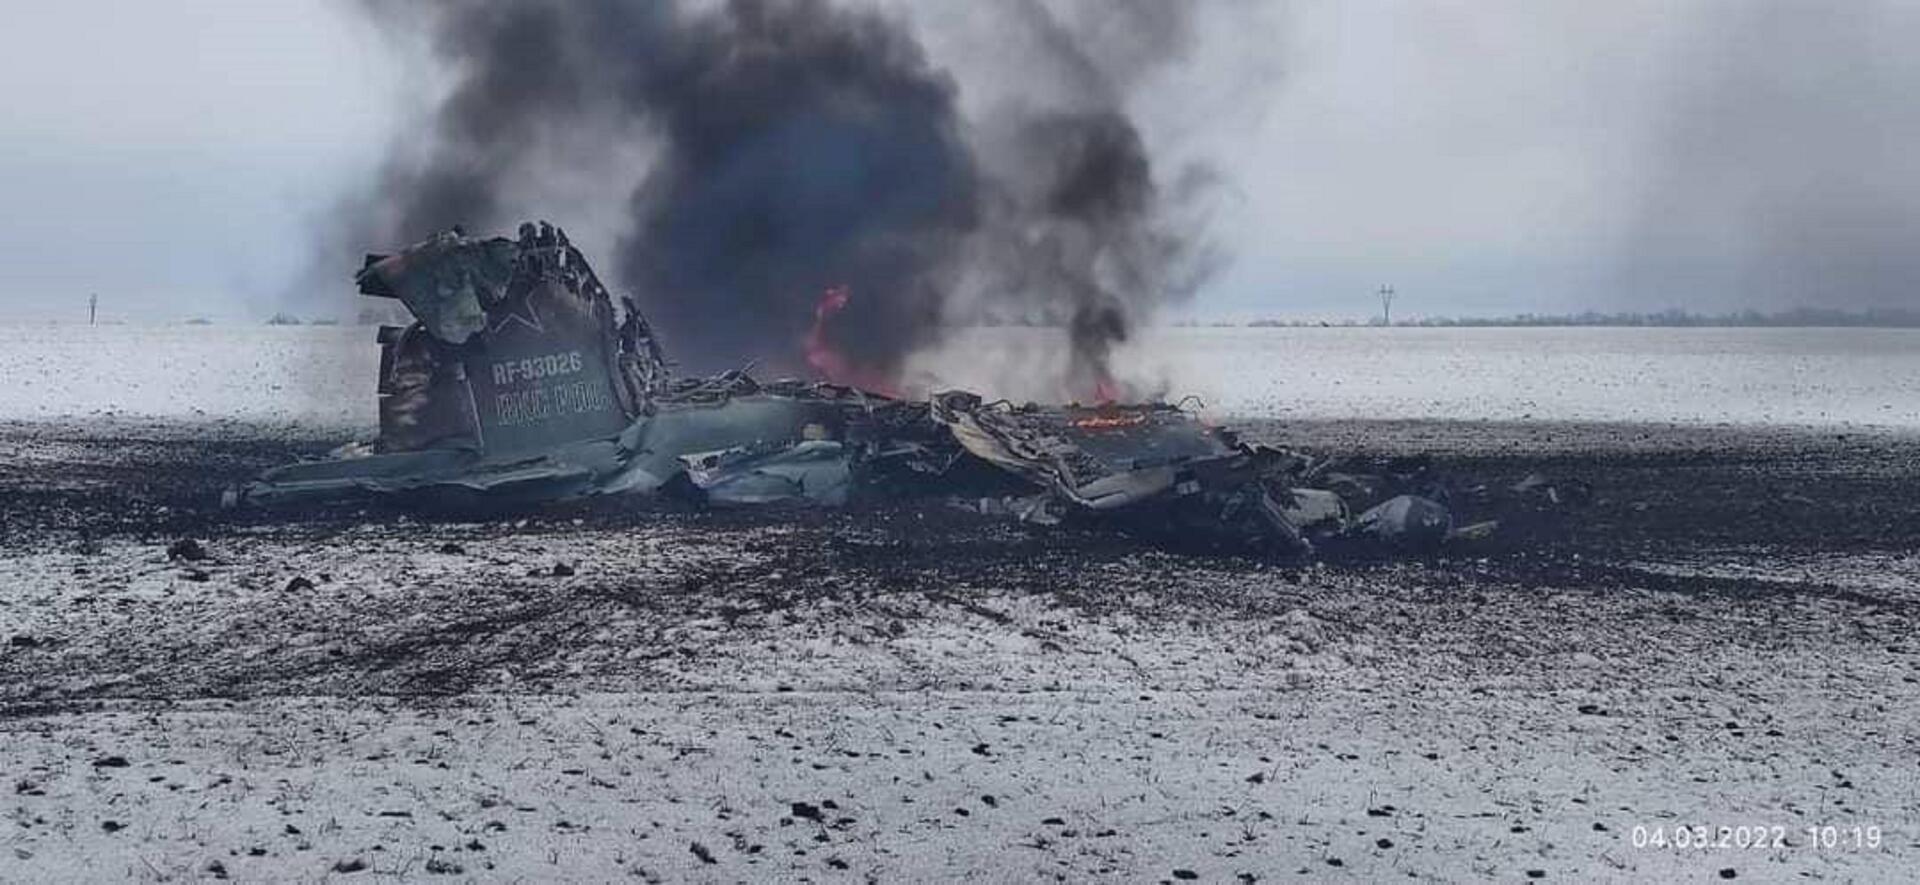 Ukraine shot down the Russian Su-25